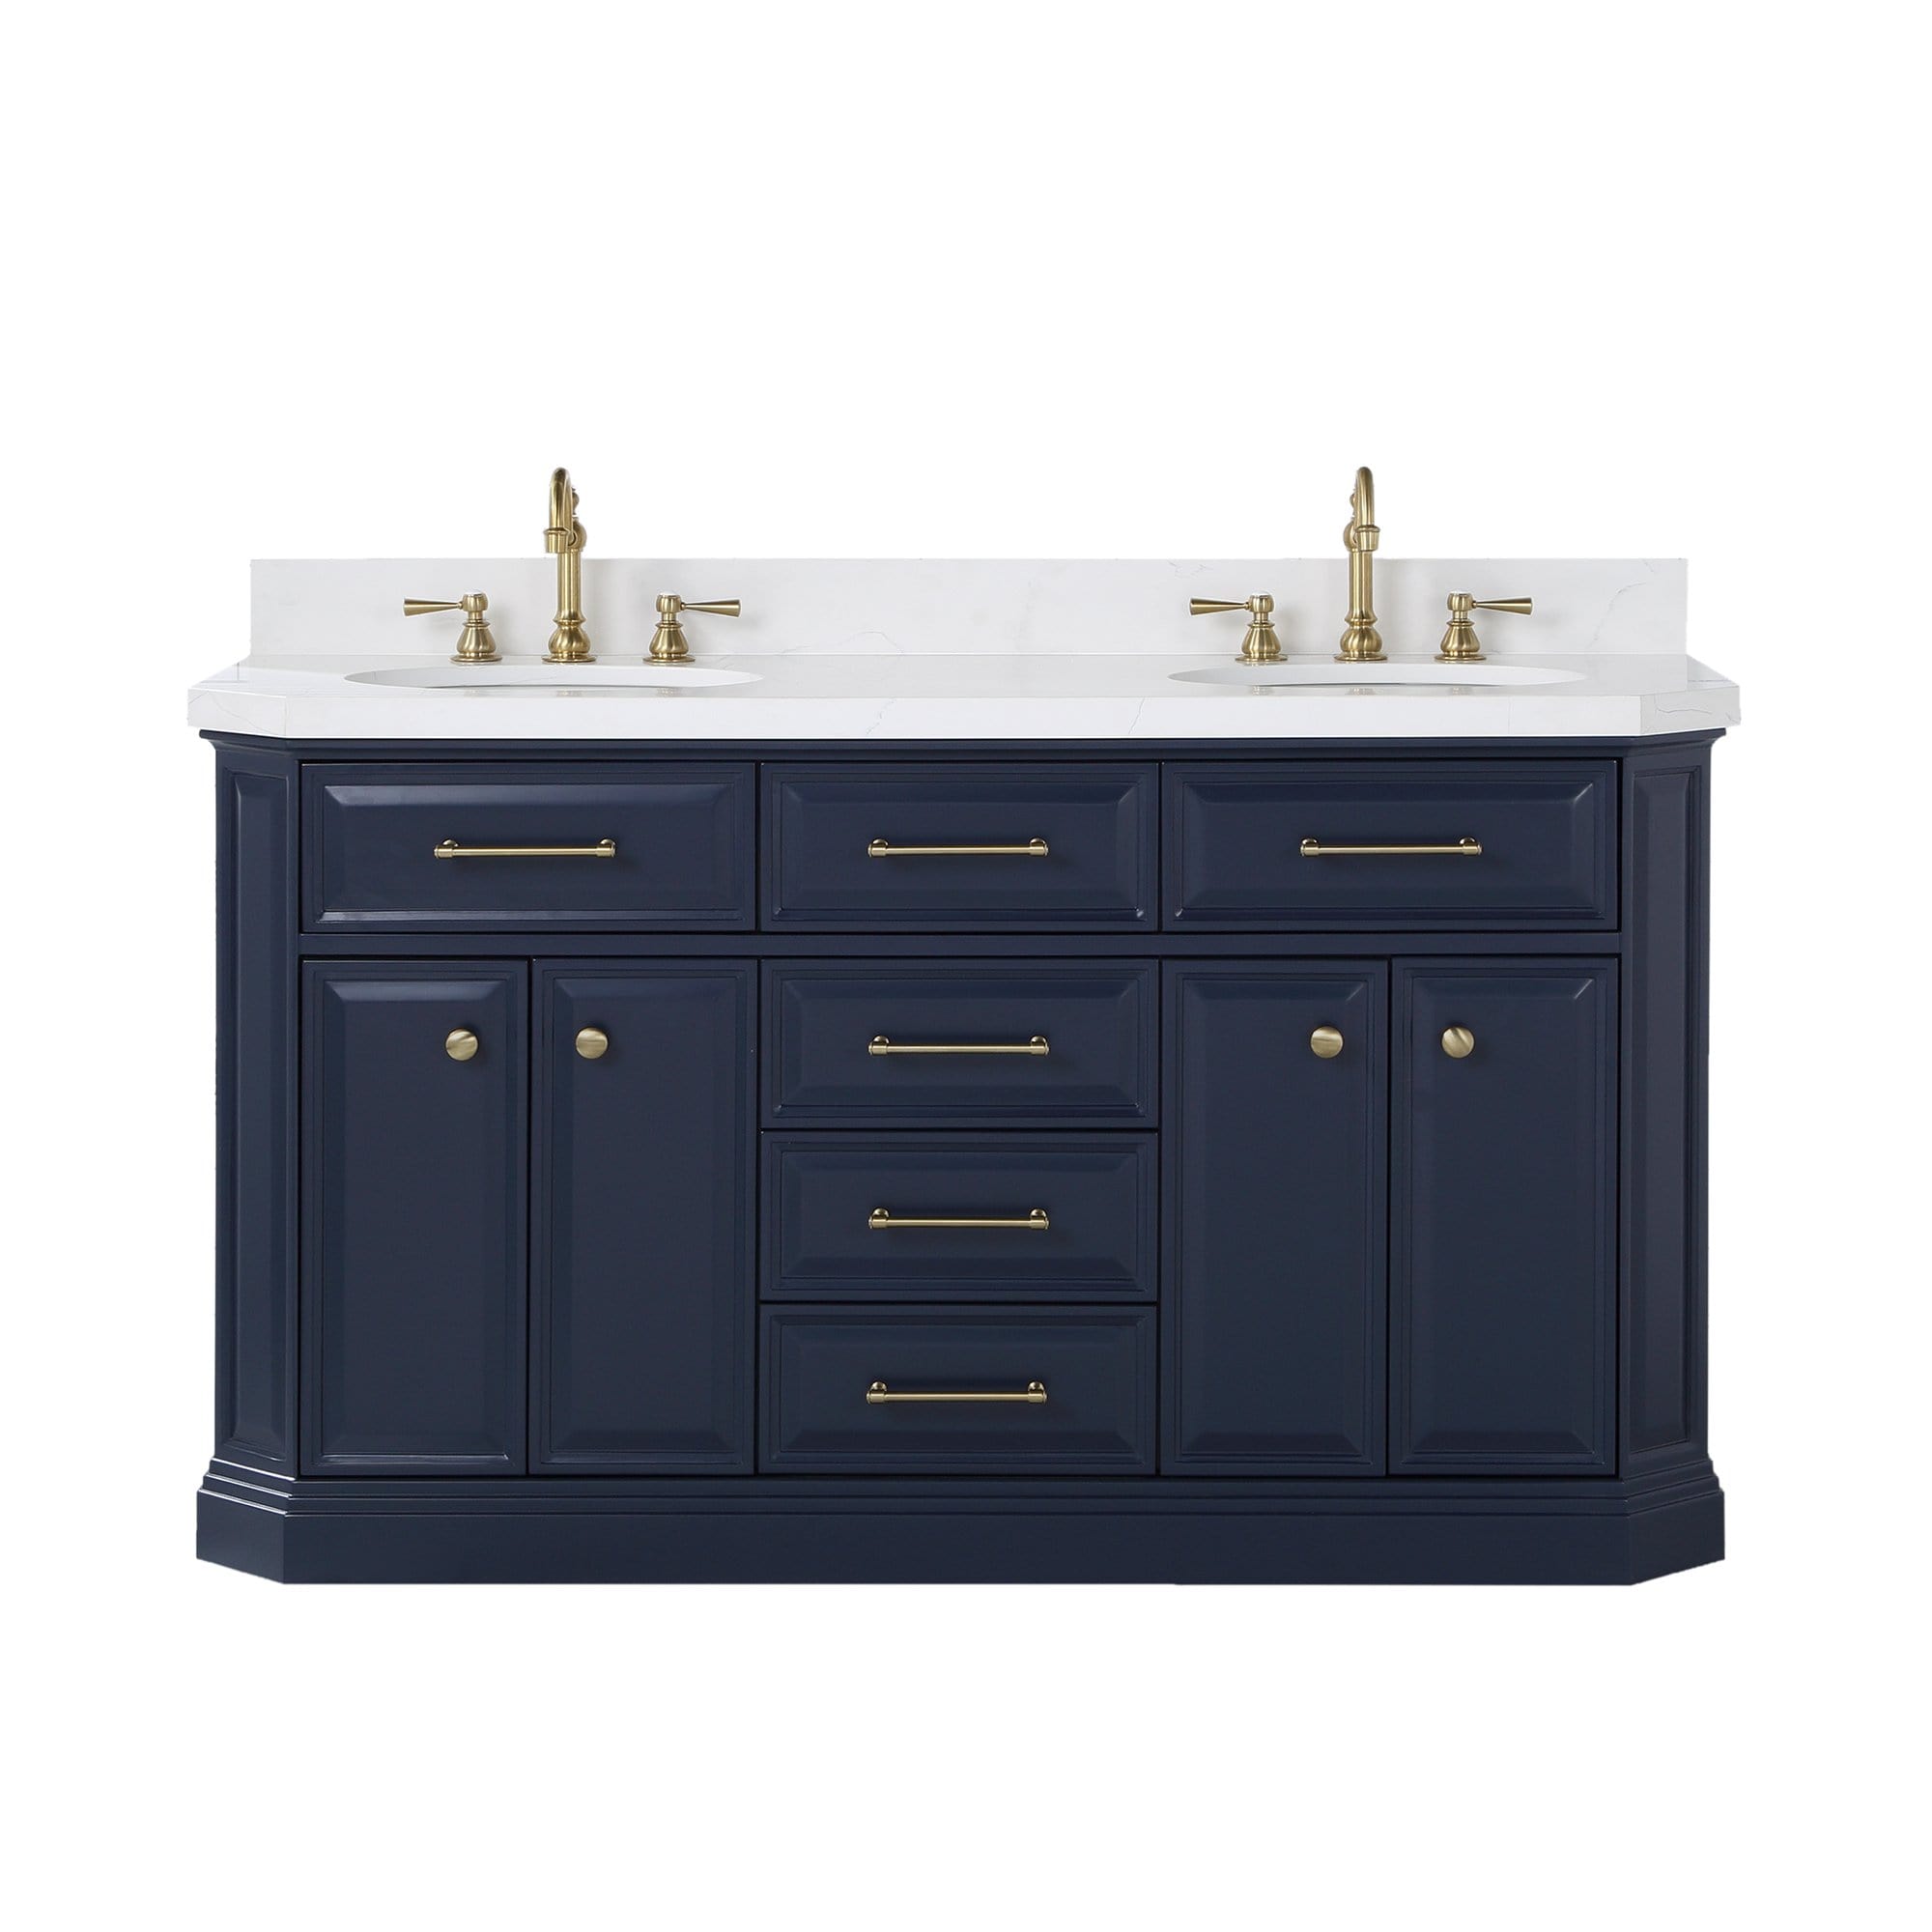 Water Creation Palace 60 In. Double Sink White Quartz Countertop Vanity in Monarch Blue - Molaix732030764972Bathroom vanityPA60QZ06MB-000000000